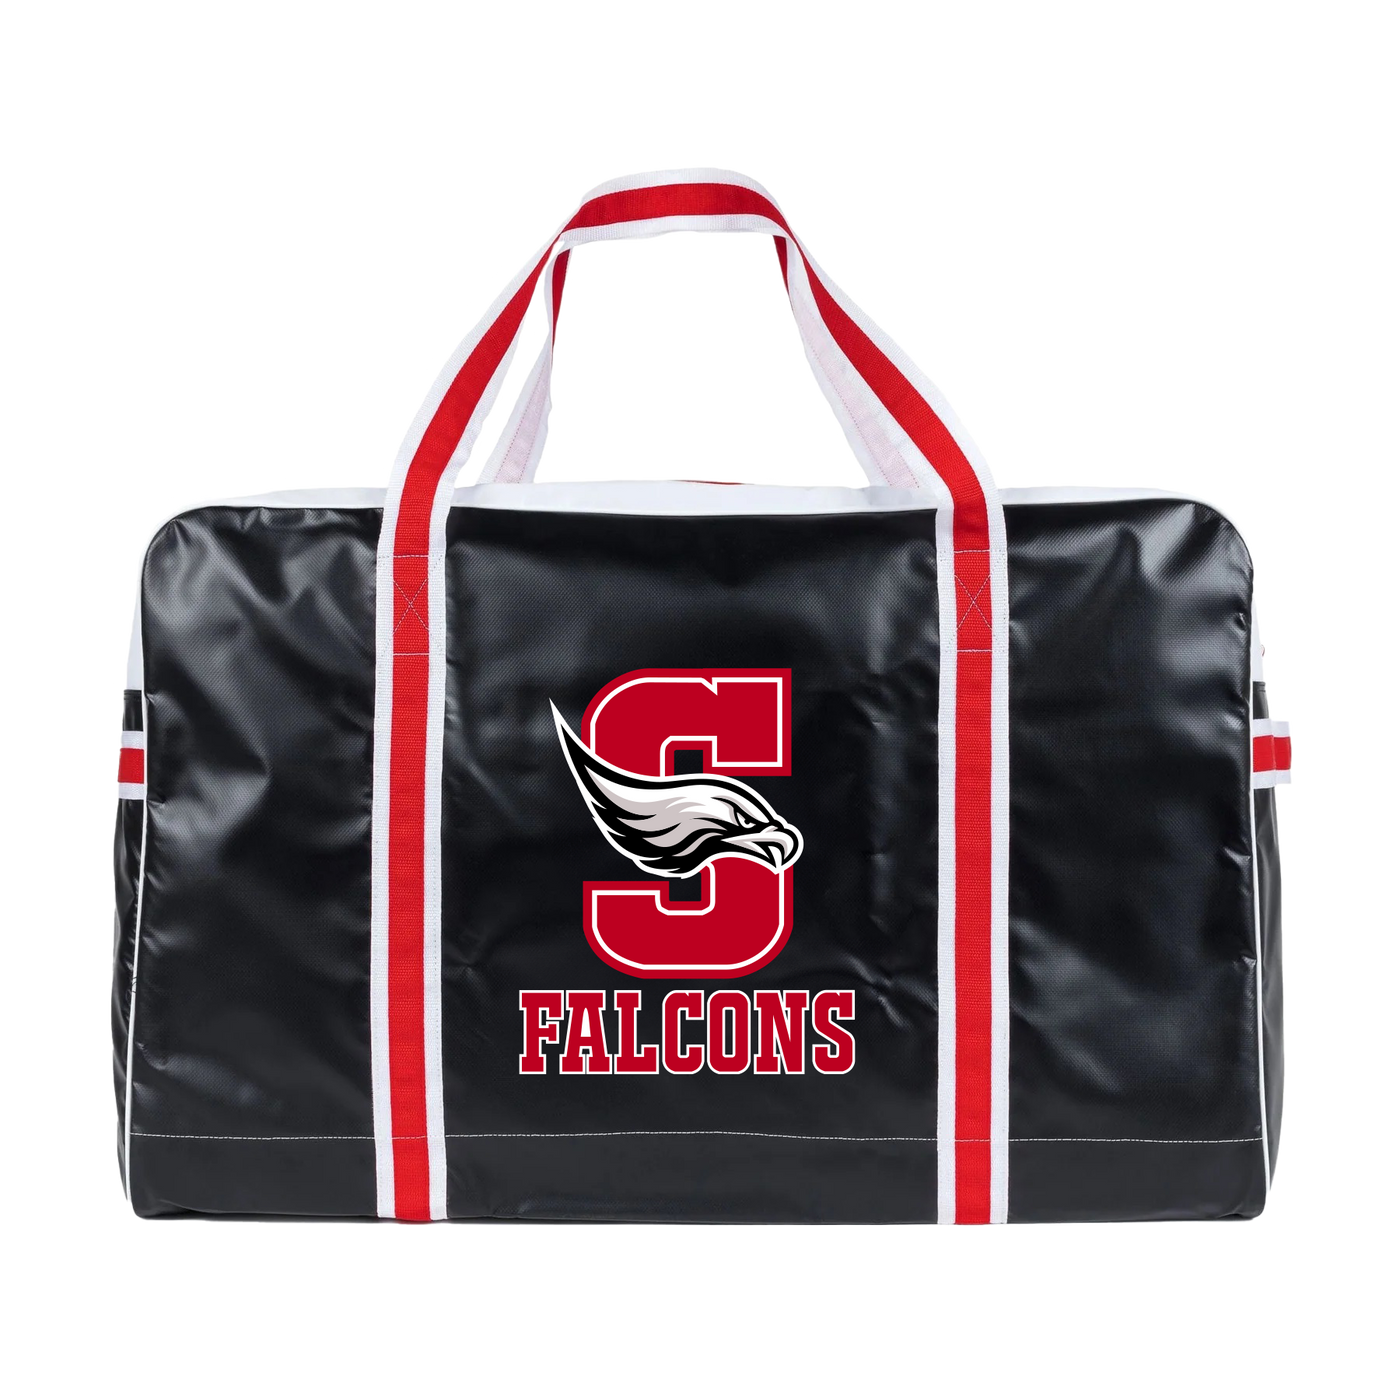 Surrey Falcons -- Warrior Goalie Pro Carry Bag